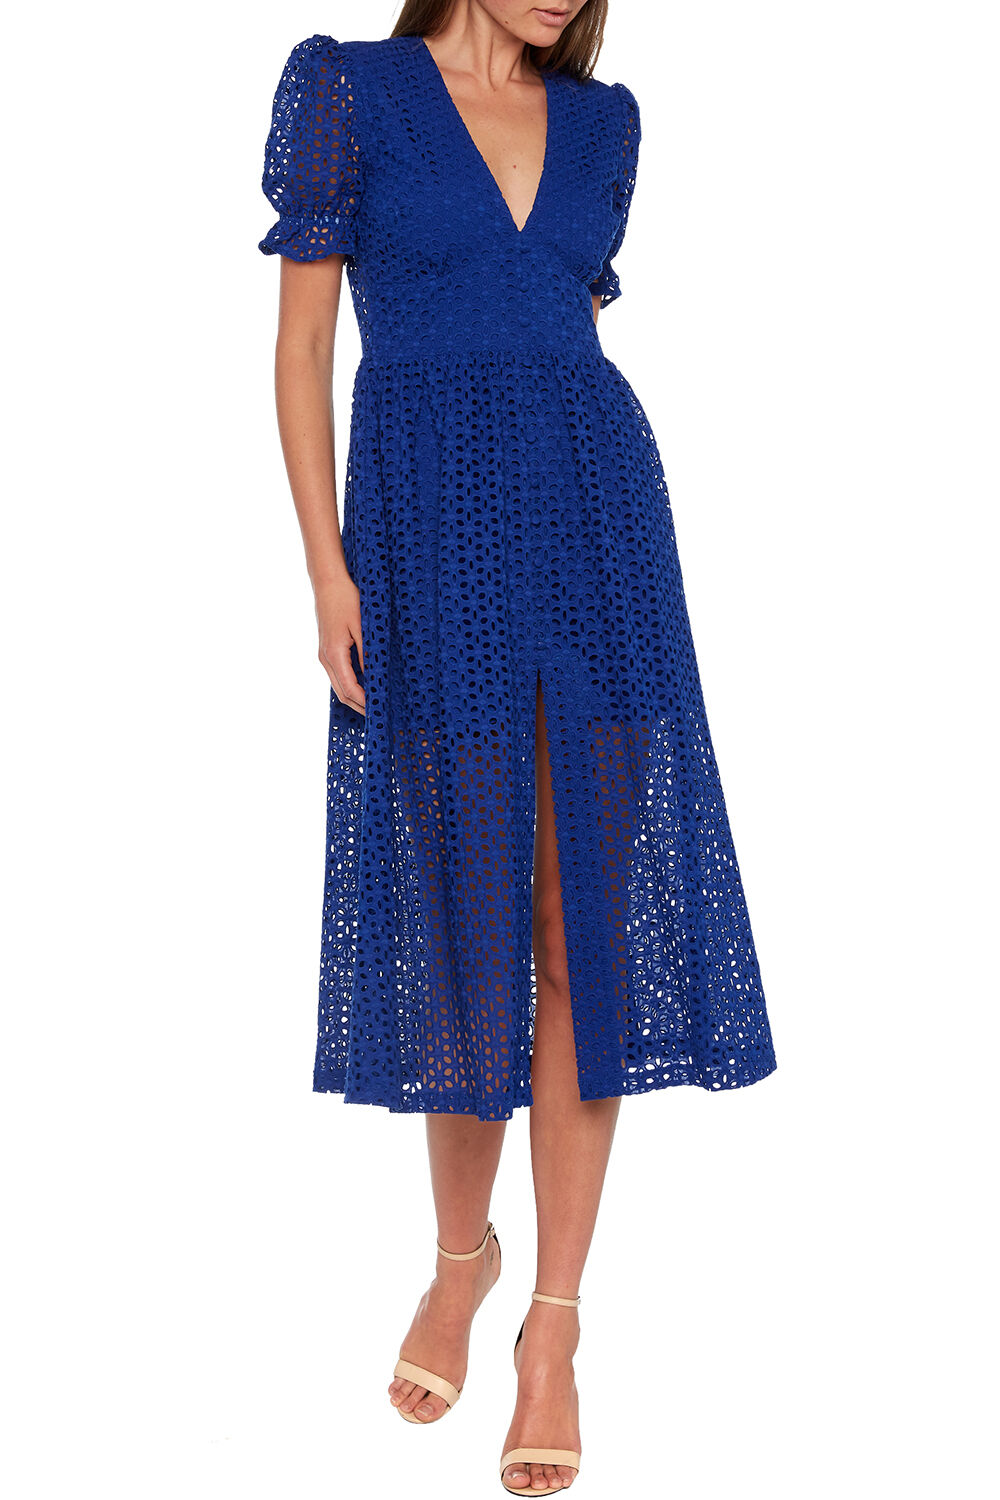 Jordan Lace Dress in Cobalt | Bardot